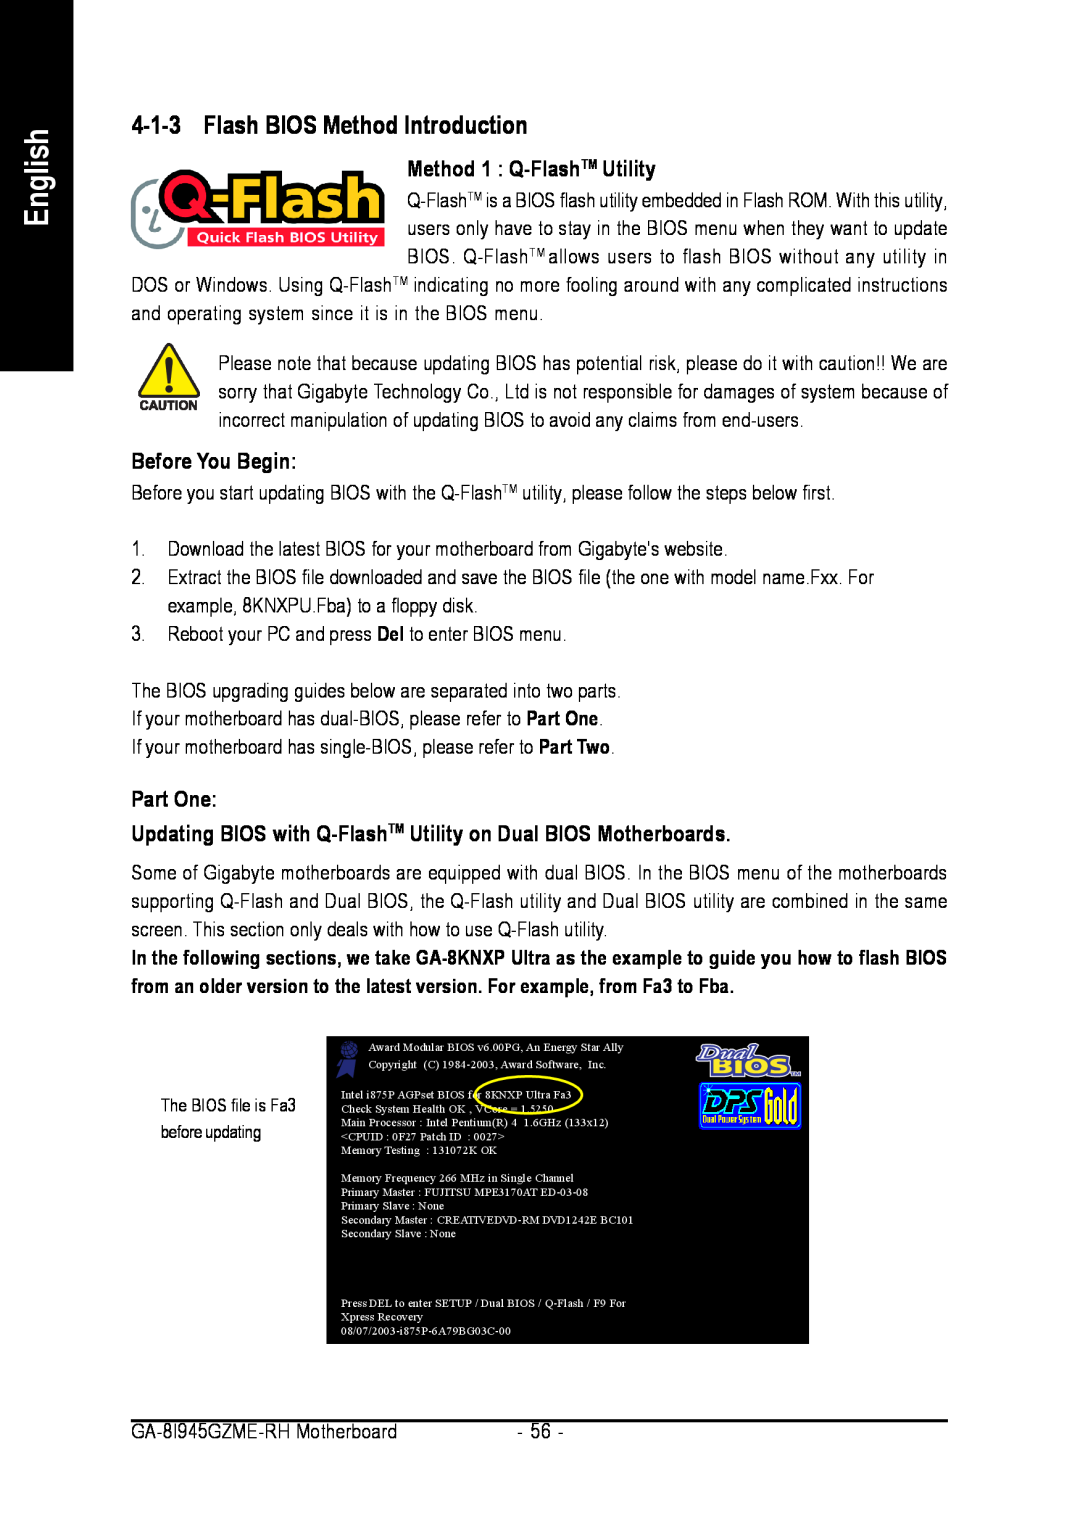 Intel GA-8I945GZME-RH Flash BIOS Method Introduction, Method 1 Q-FlashTM Utility, Before You Begin, Part One, English 